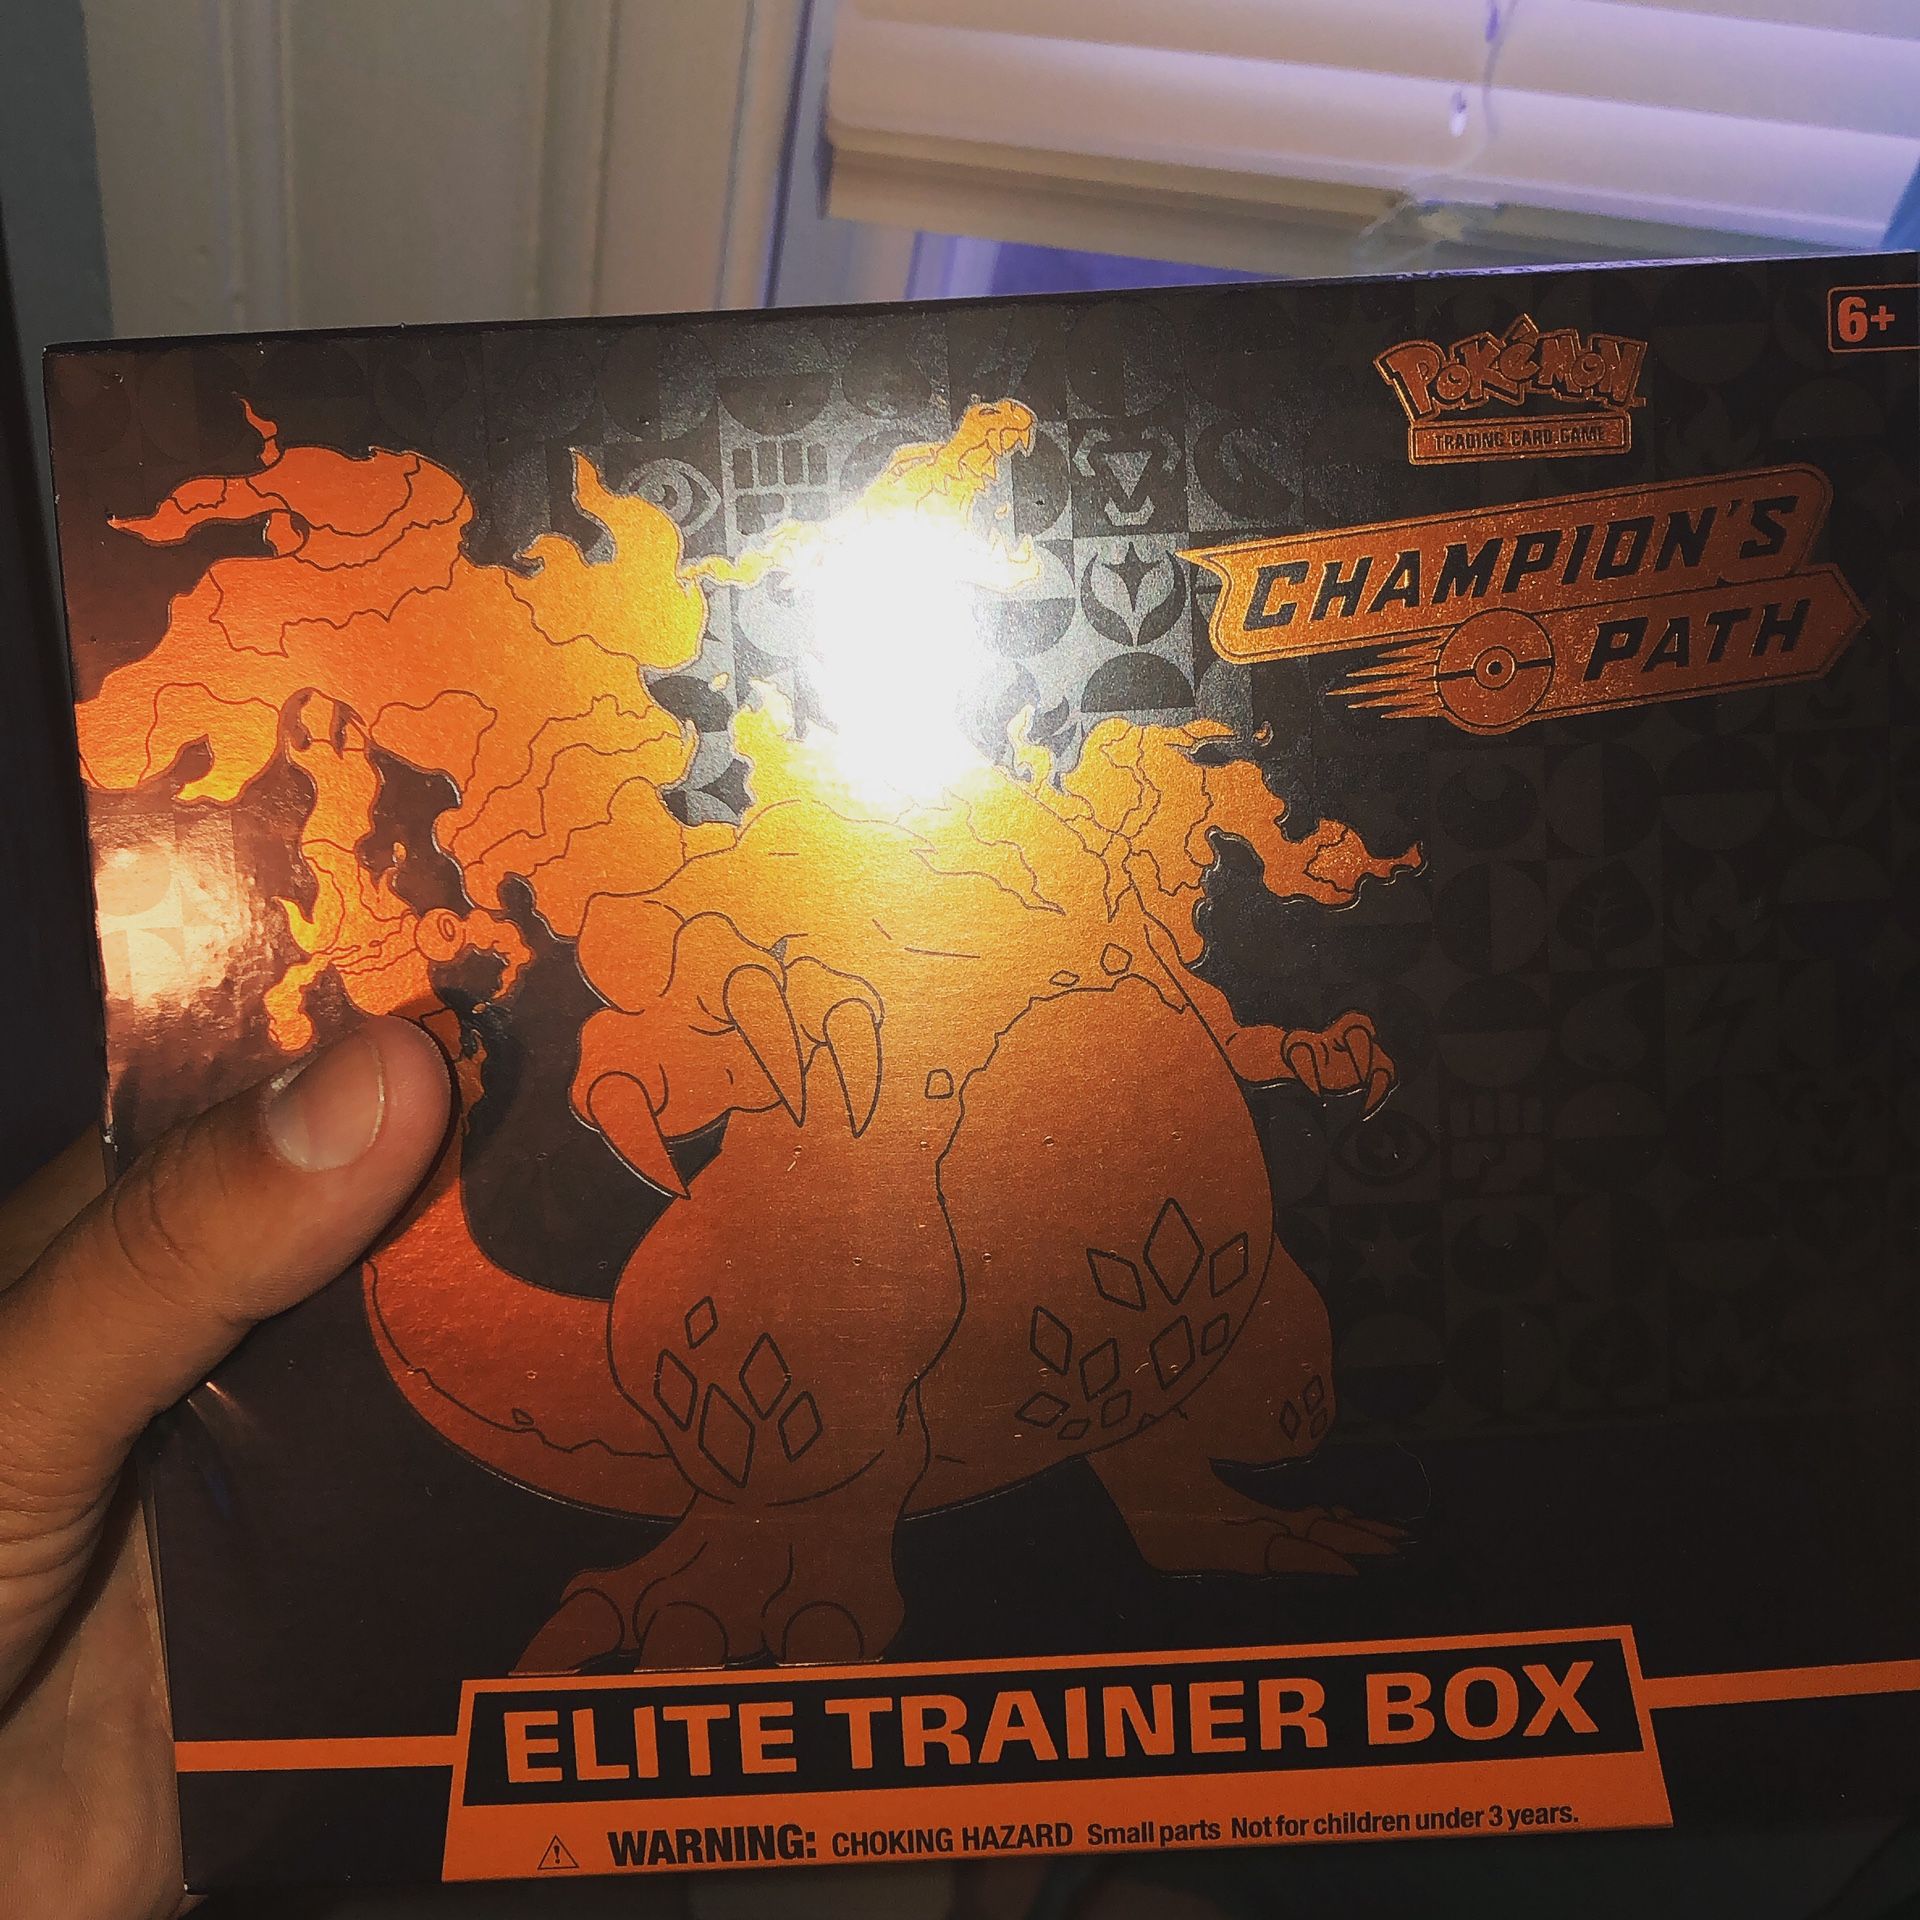 Pokémon champions path elite trainer box